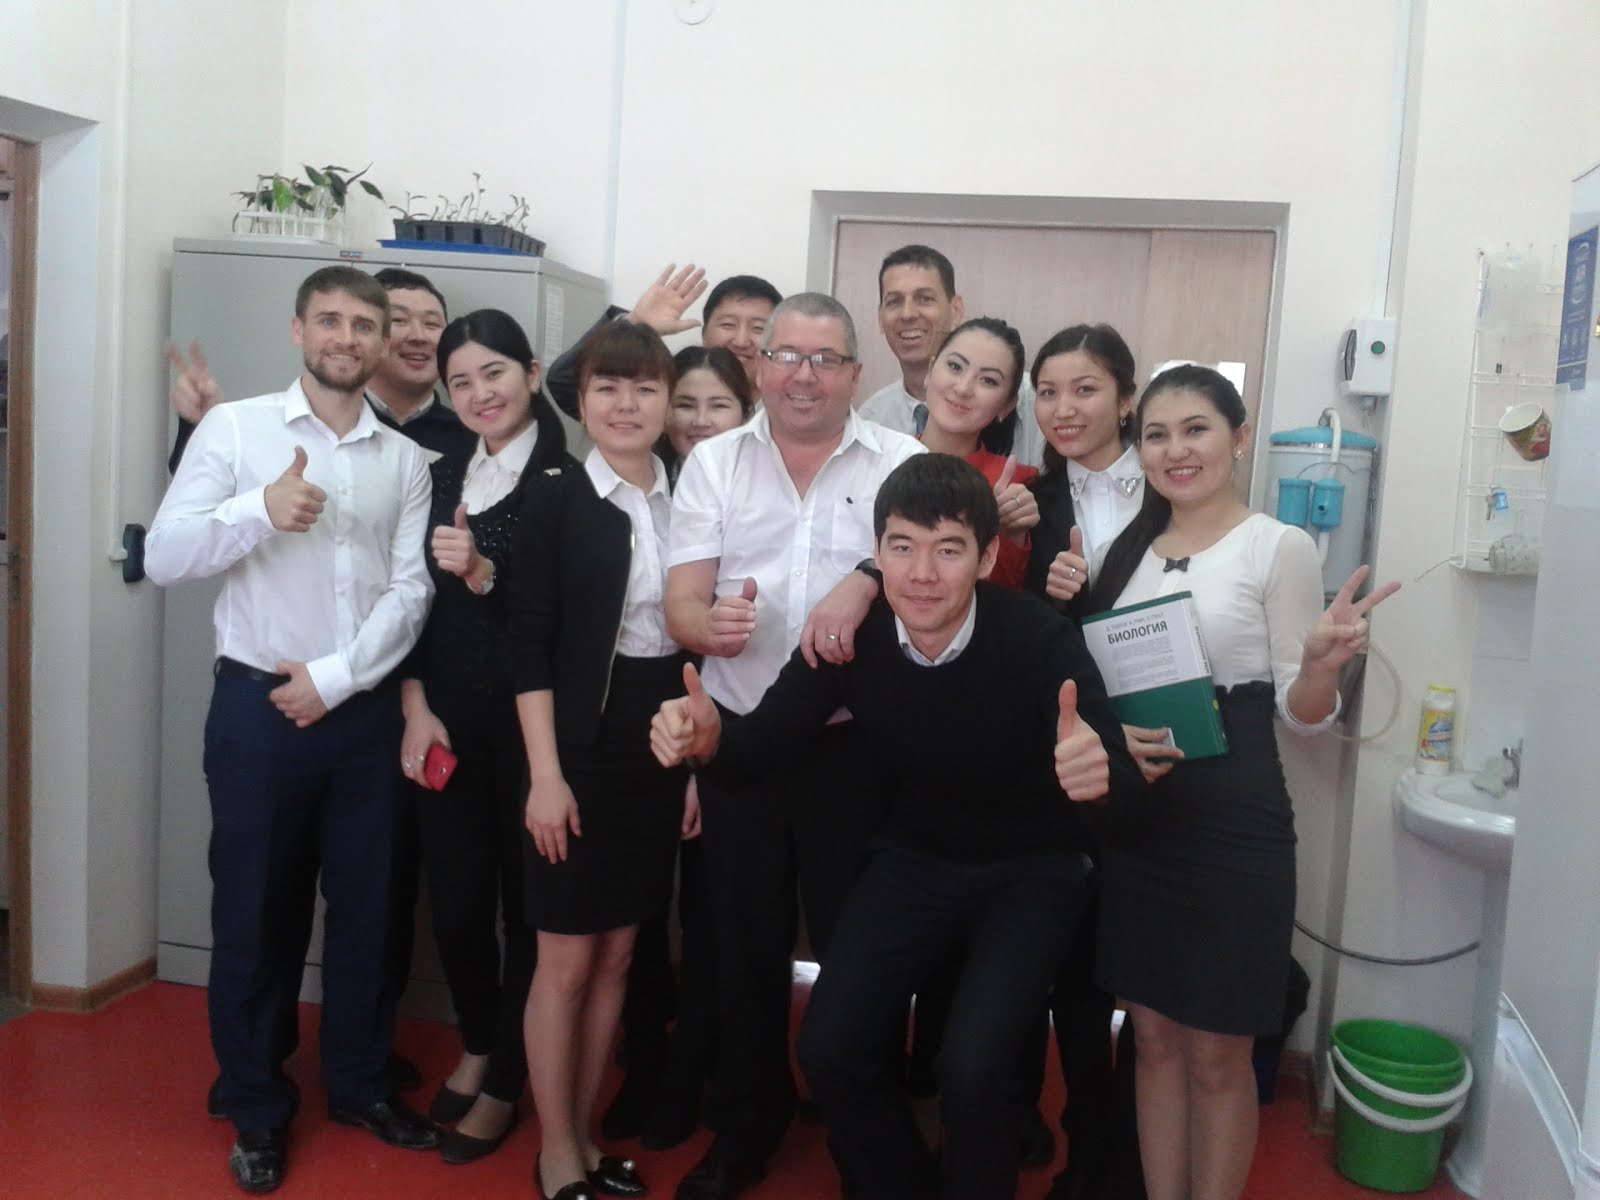 Teaching colleagues in Kazakhstan